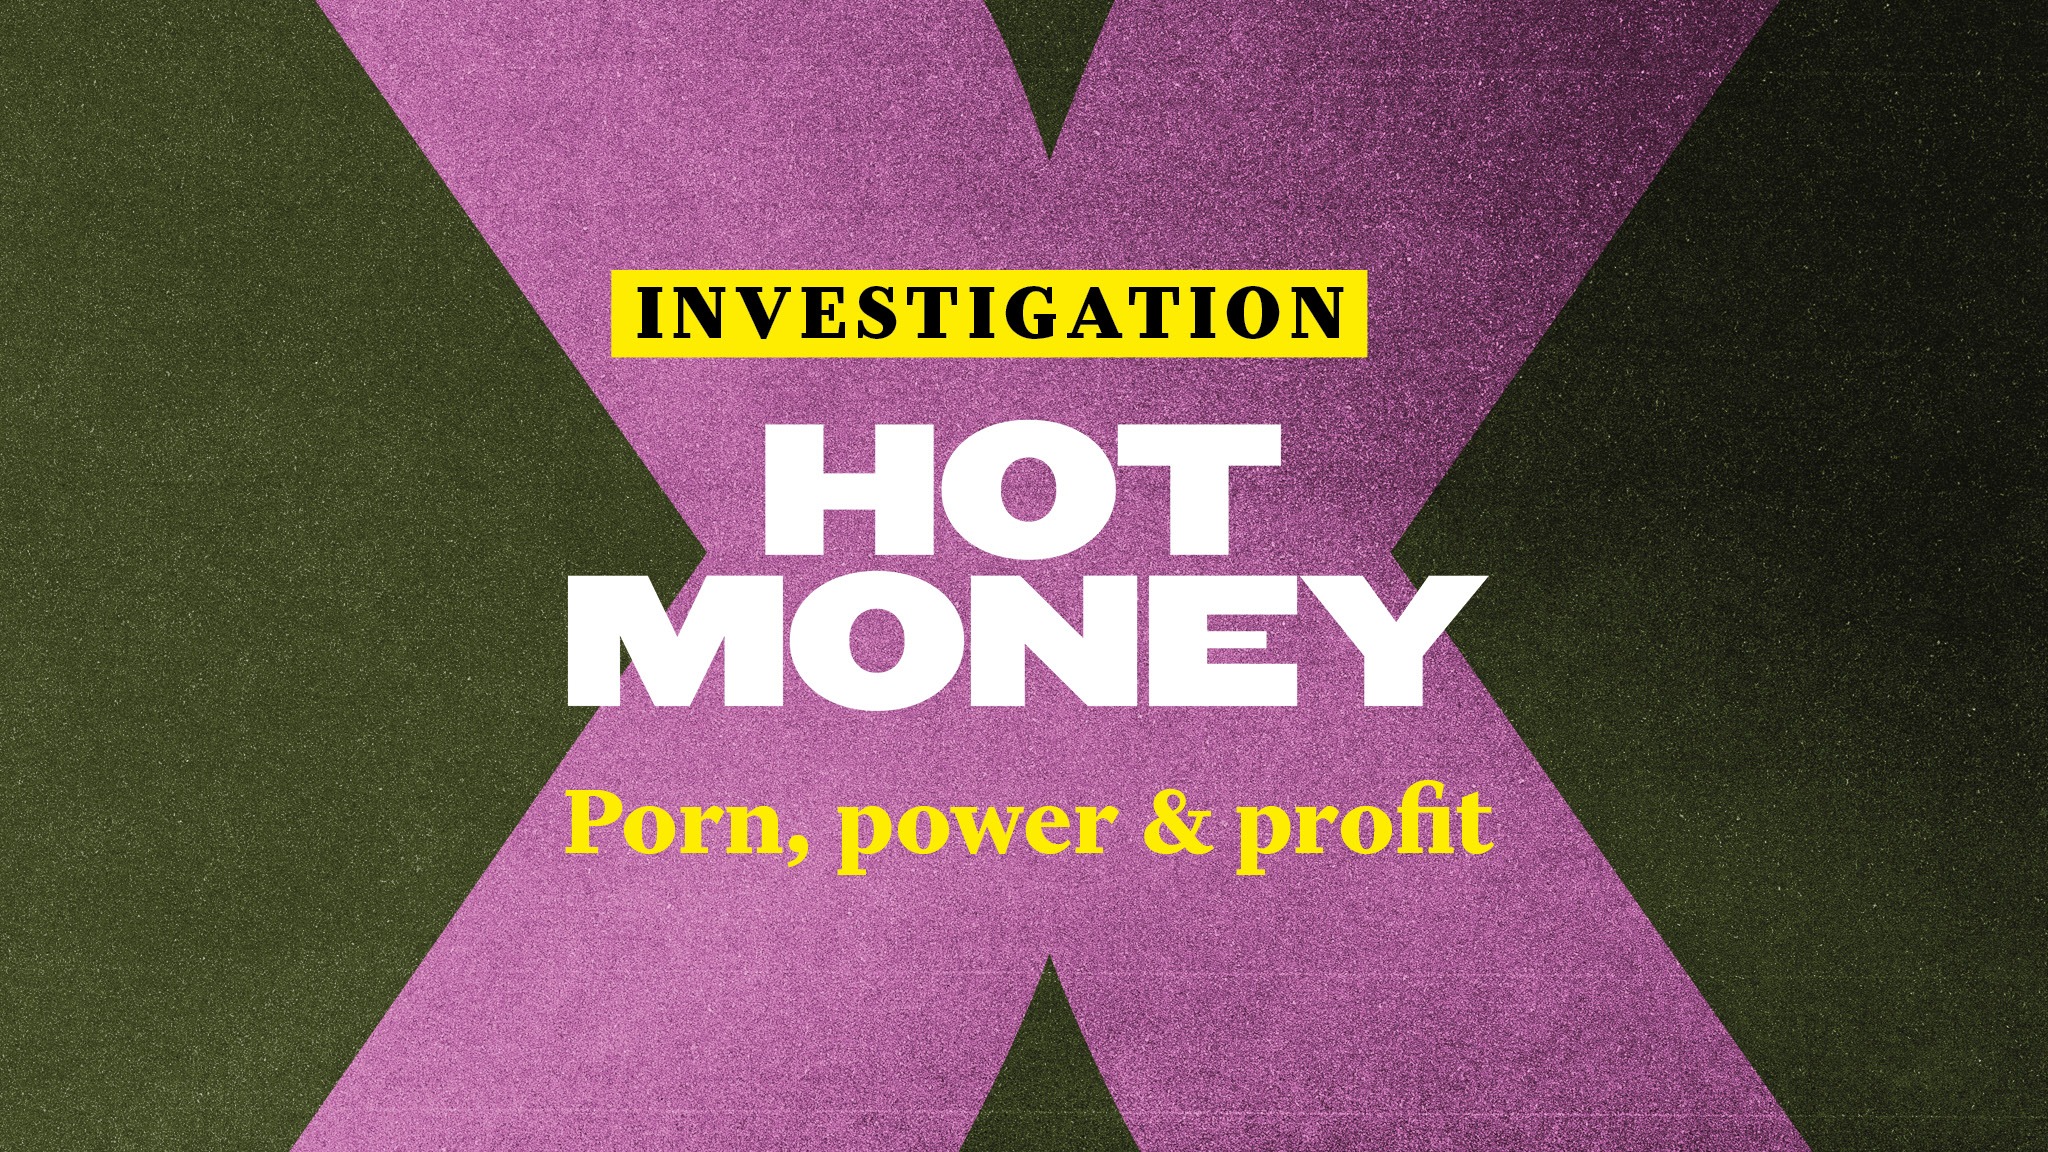 Porn Profits - Hot Money: porn, power and profit | Financial Times